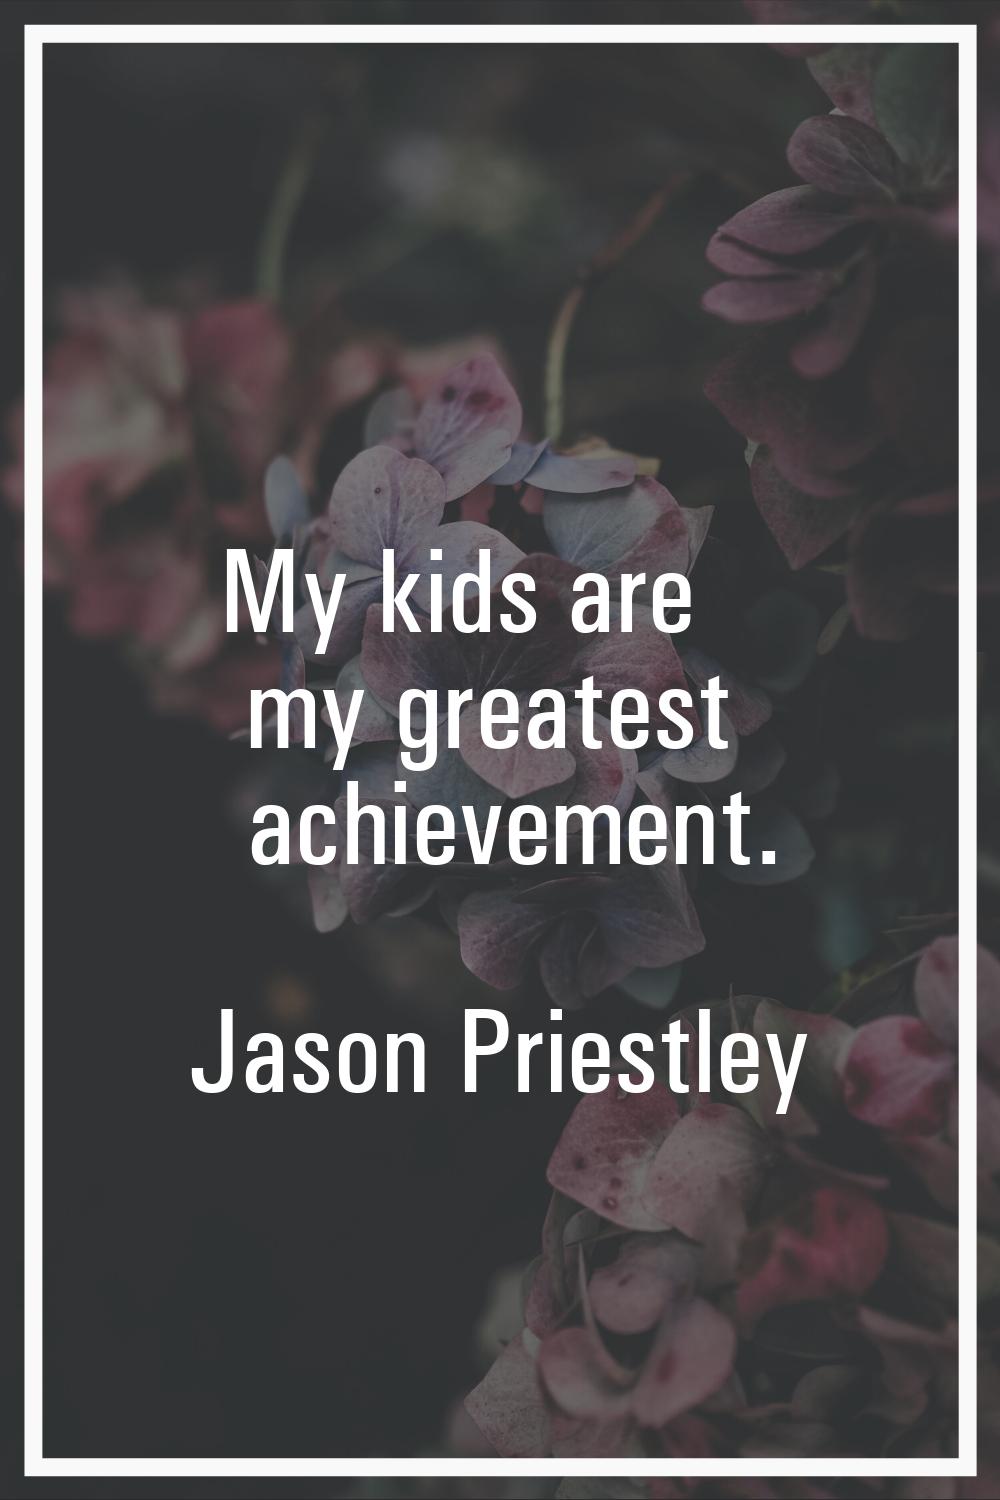 My kids are my greatest achievement.